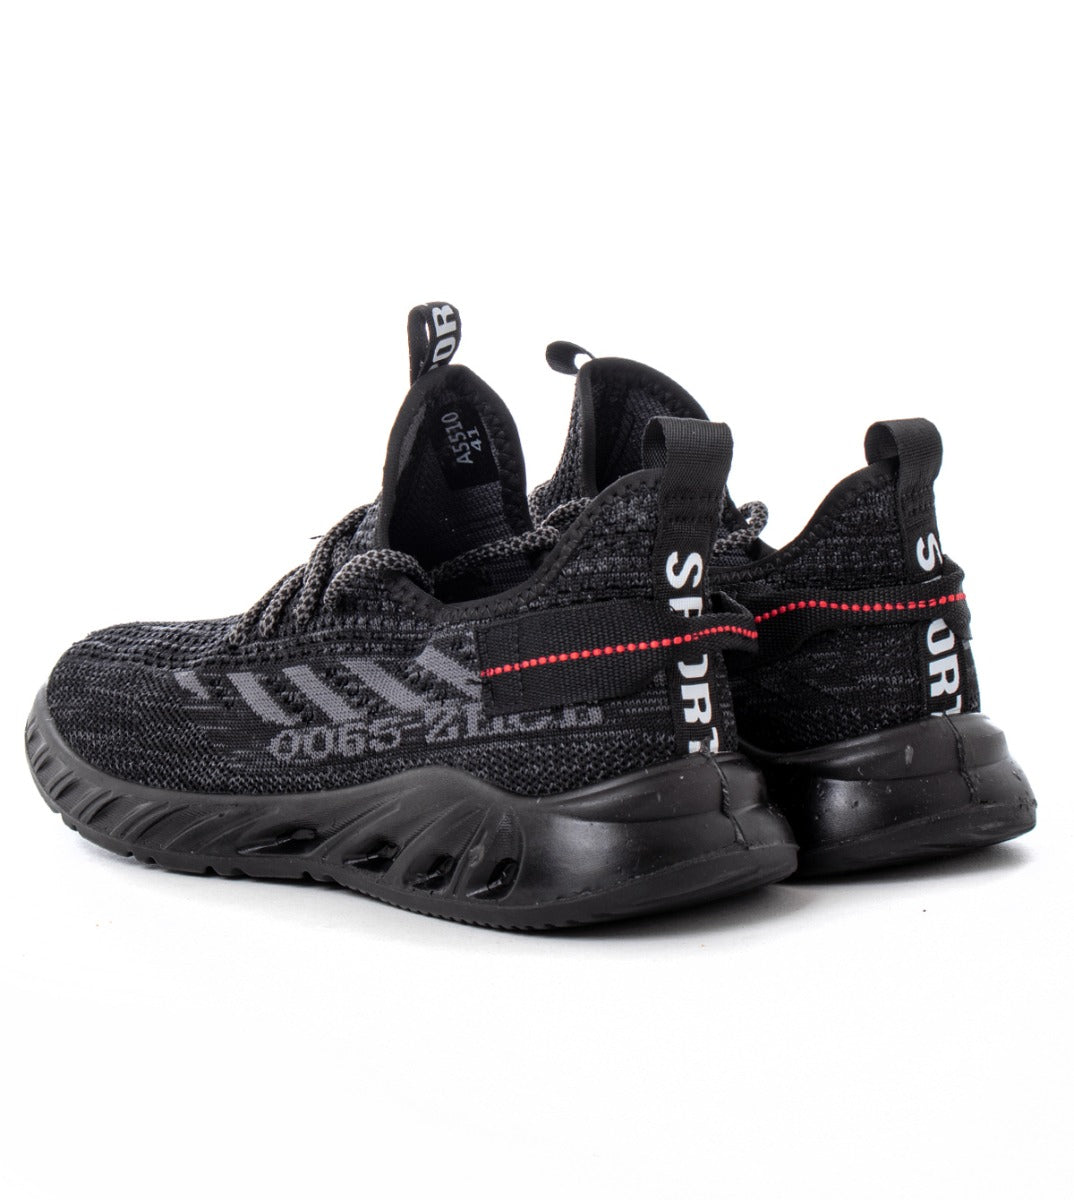 Scarpe Uomo Shoes Sneakers Sportiva Casual Nera GIOSAL-S1107A